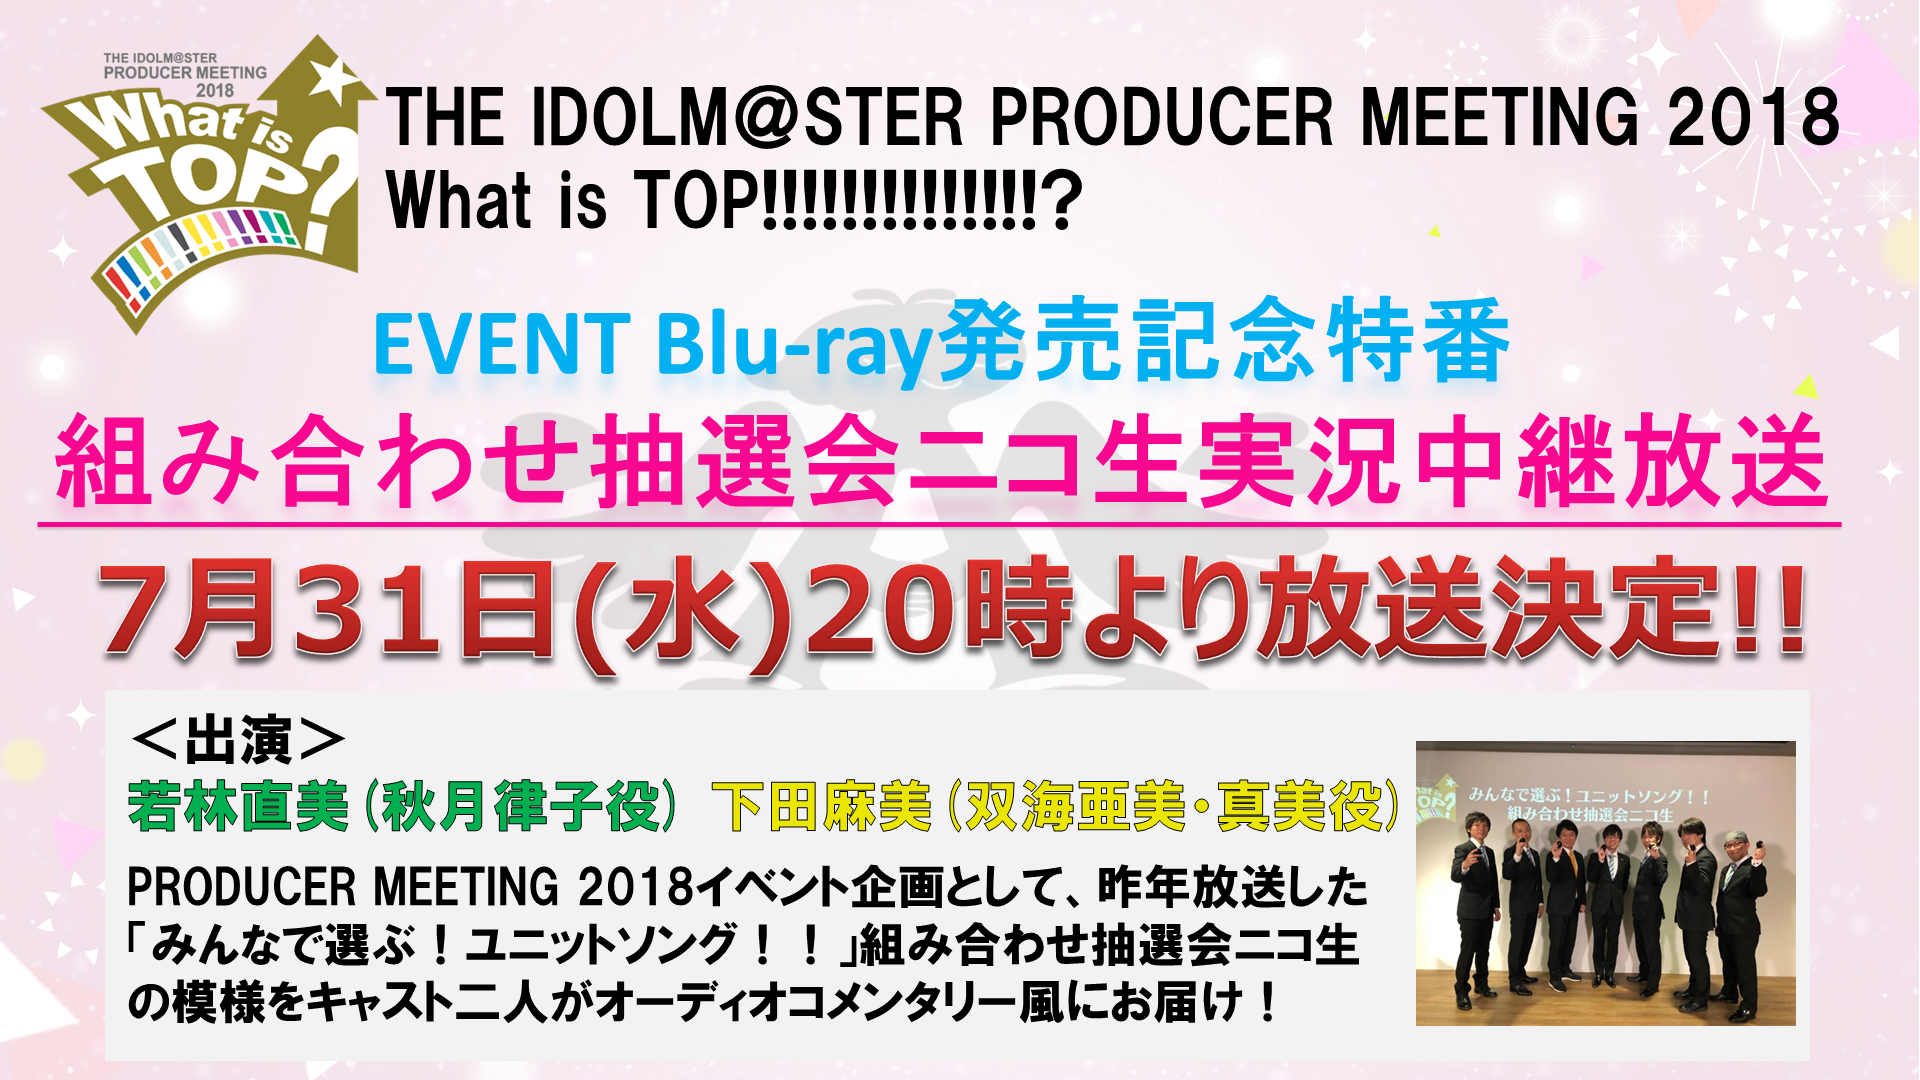 Blog The Idolm Ster Official Web バンダイナムコエンターテインメント公式サイト